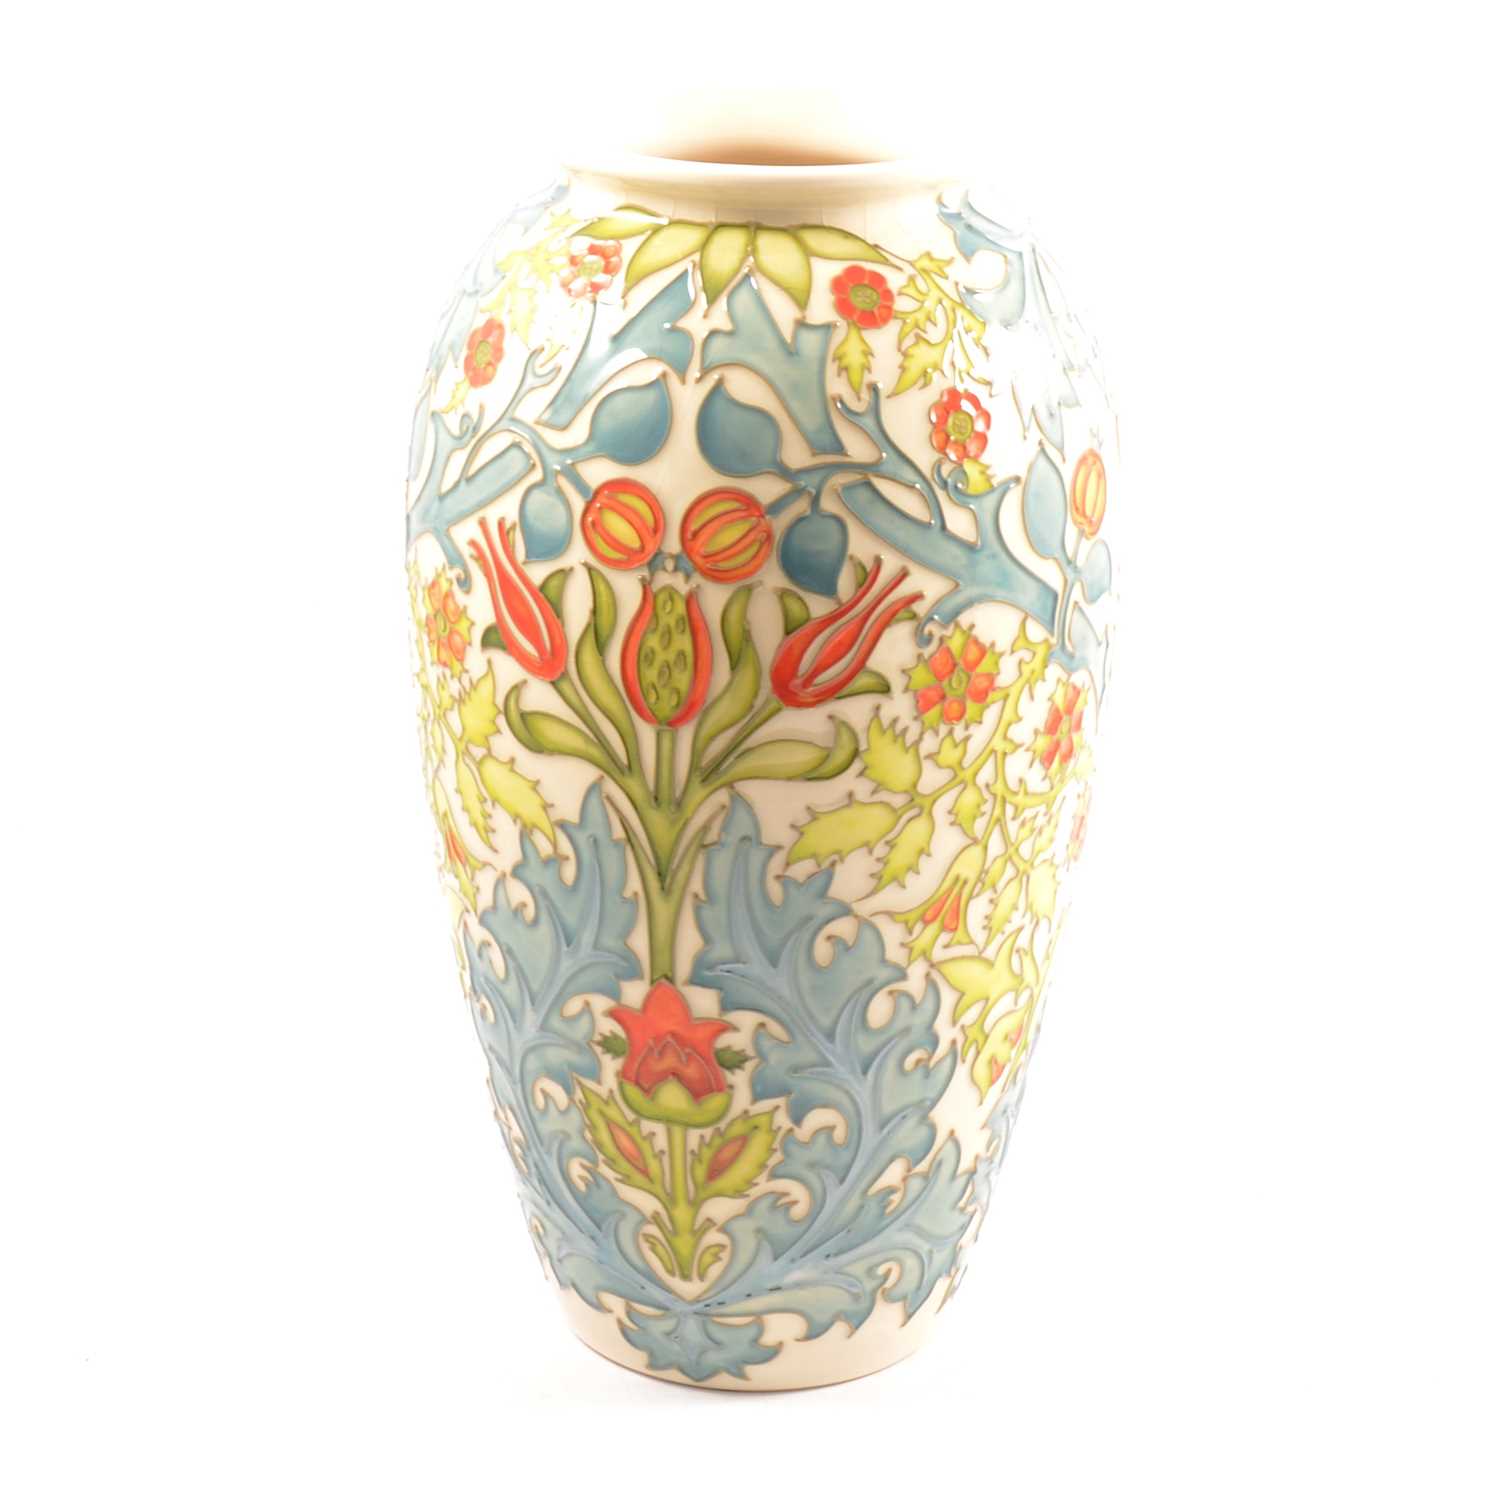 Lot 51 - Moorcroft Pottery, ovoid form vase, 1994